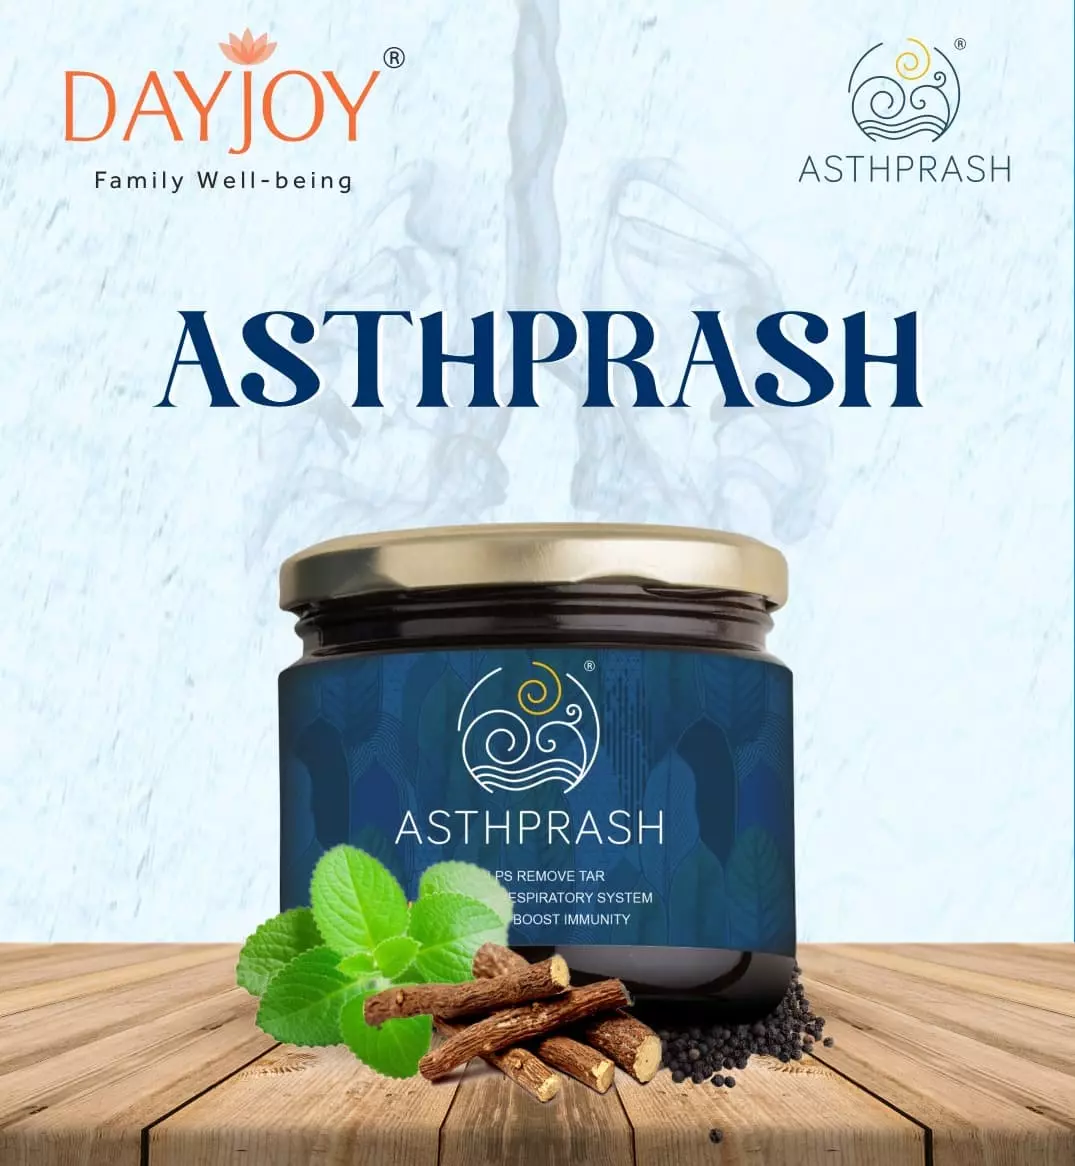 Asthprash- an ayurvedic medicine to improve lung health.